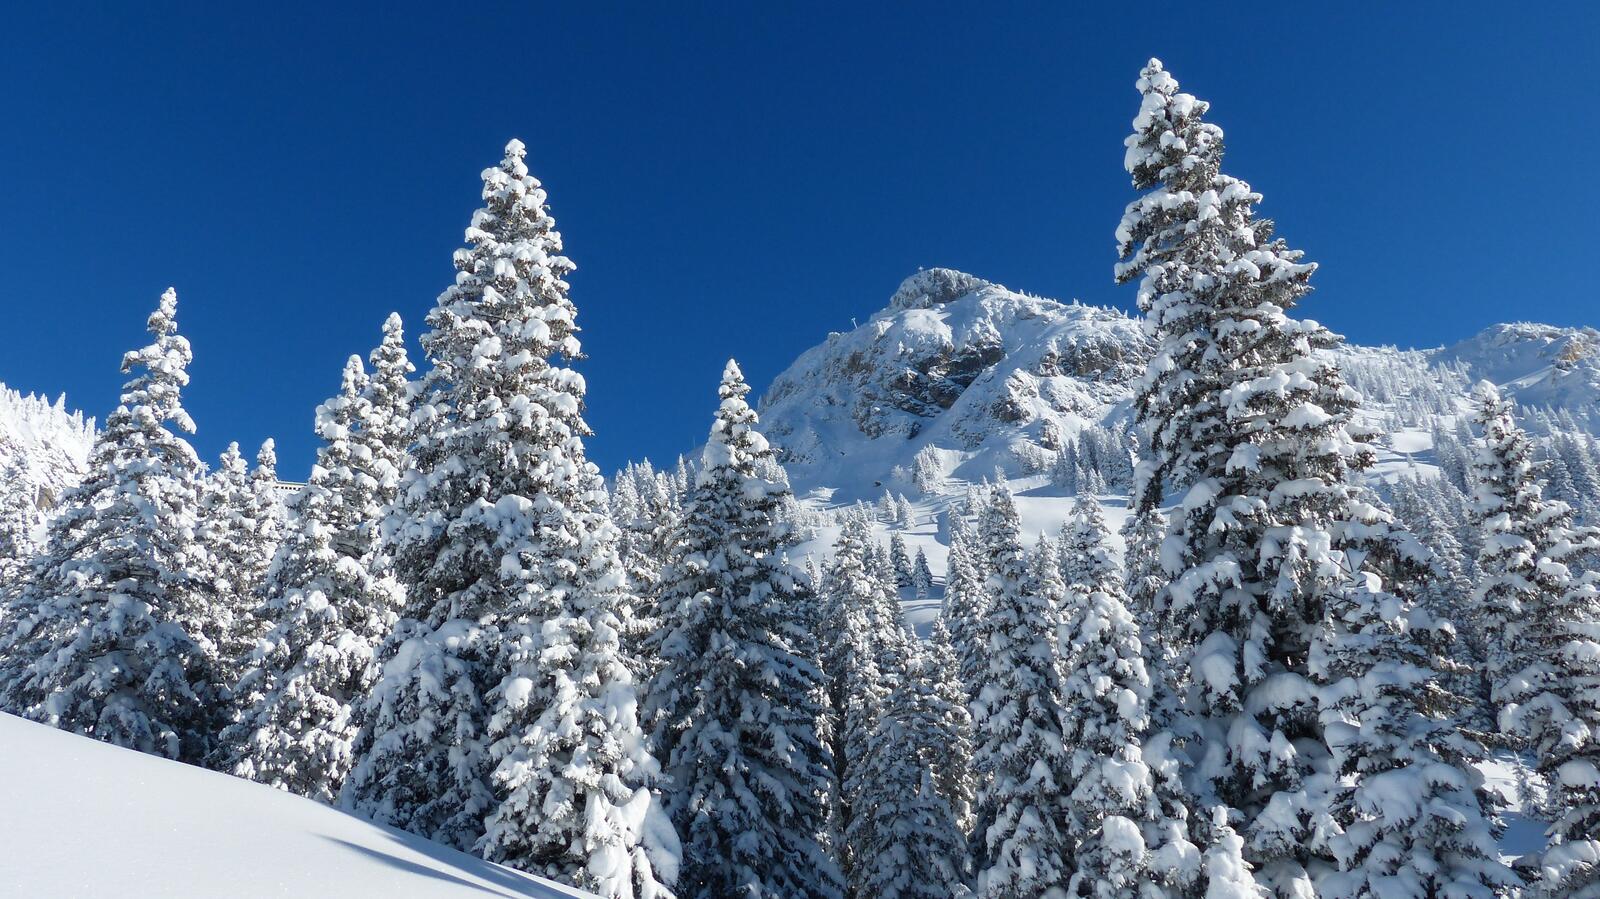 Wallpapers fir snowy landscape backcountry skiiing on the desktop